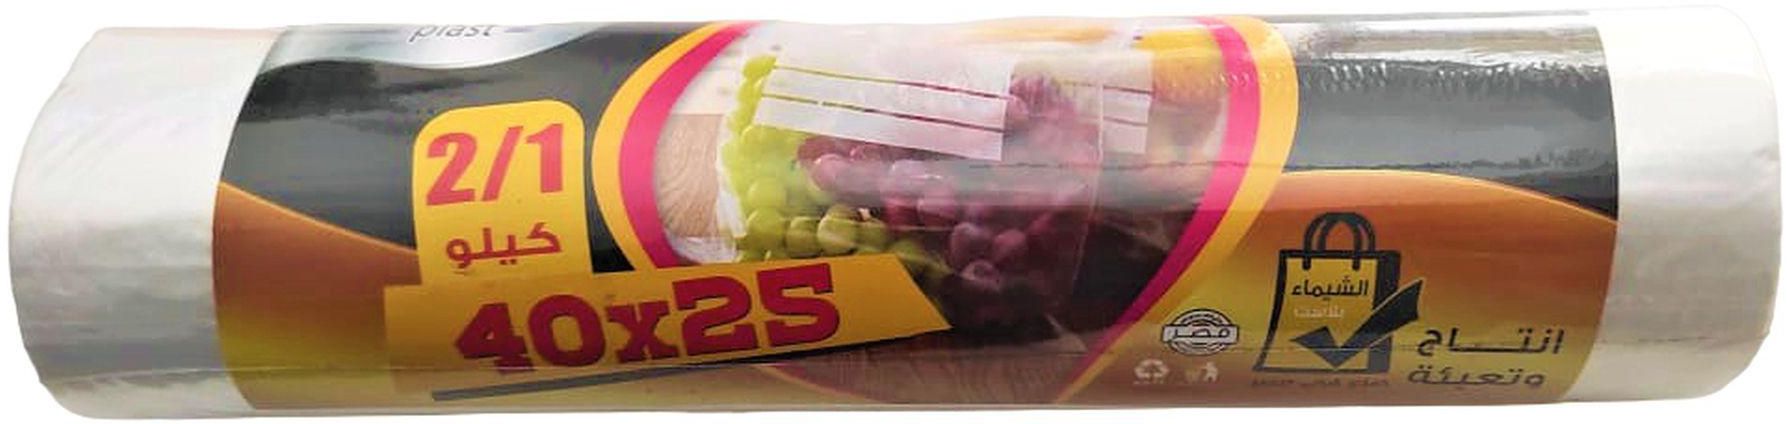 Refrigerator And Sandwich Bags Roll - Half A Kilo